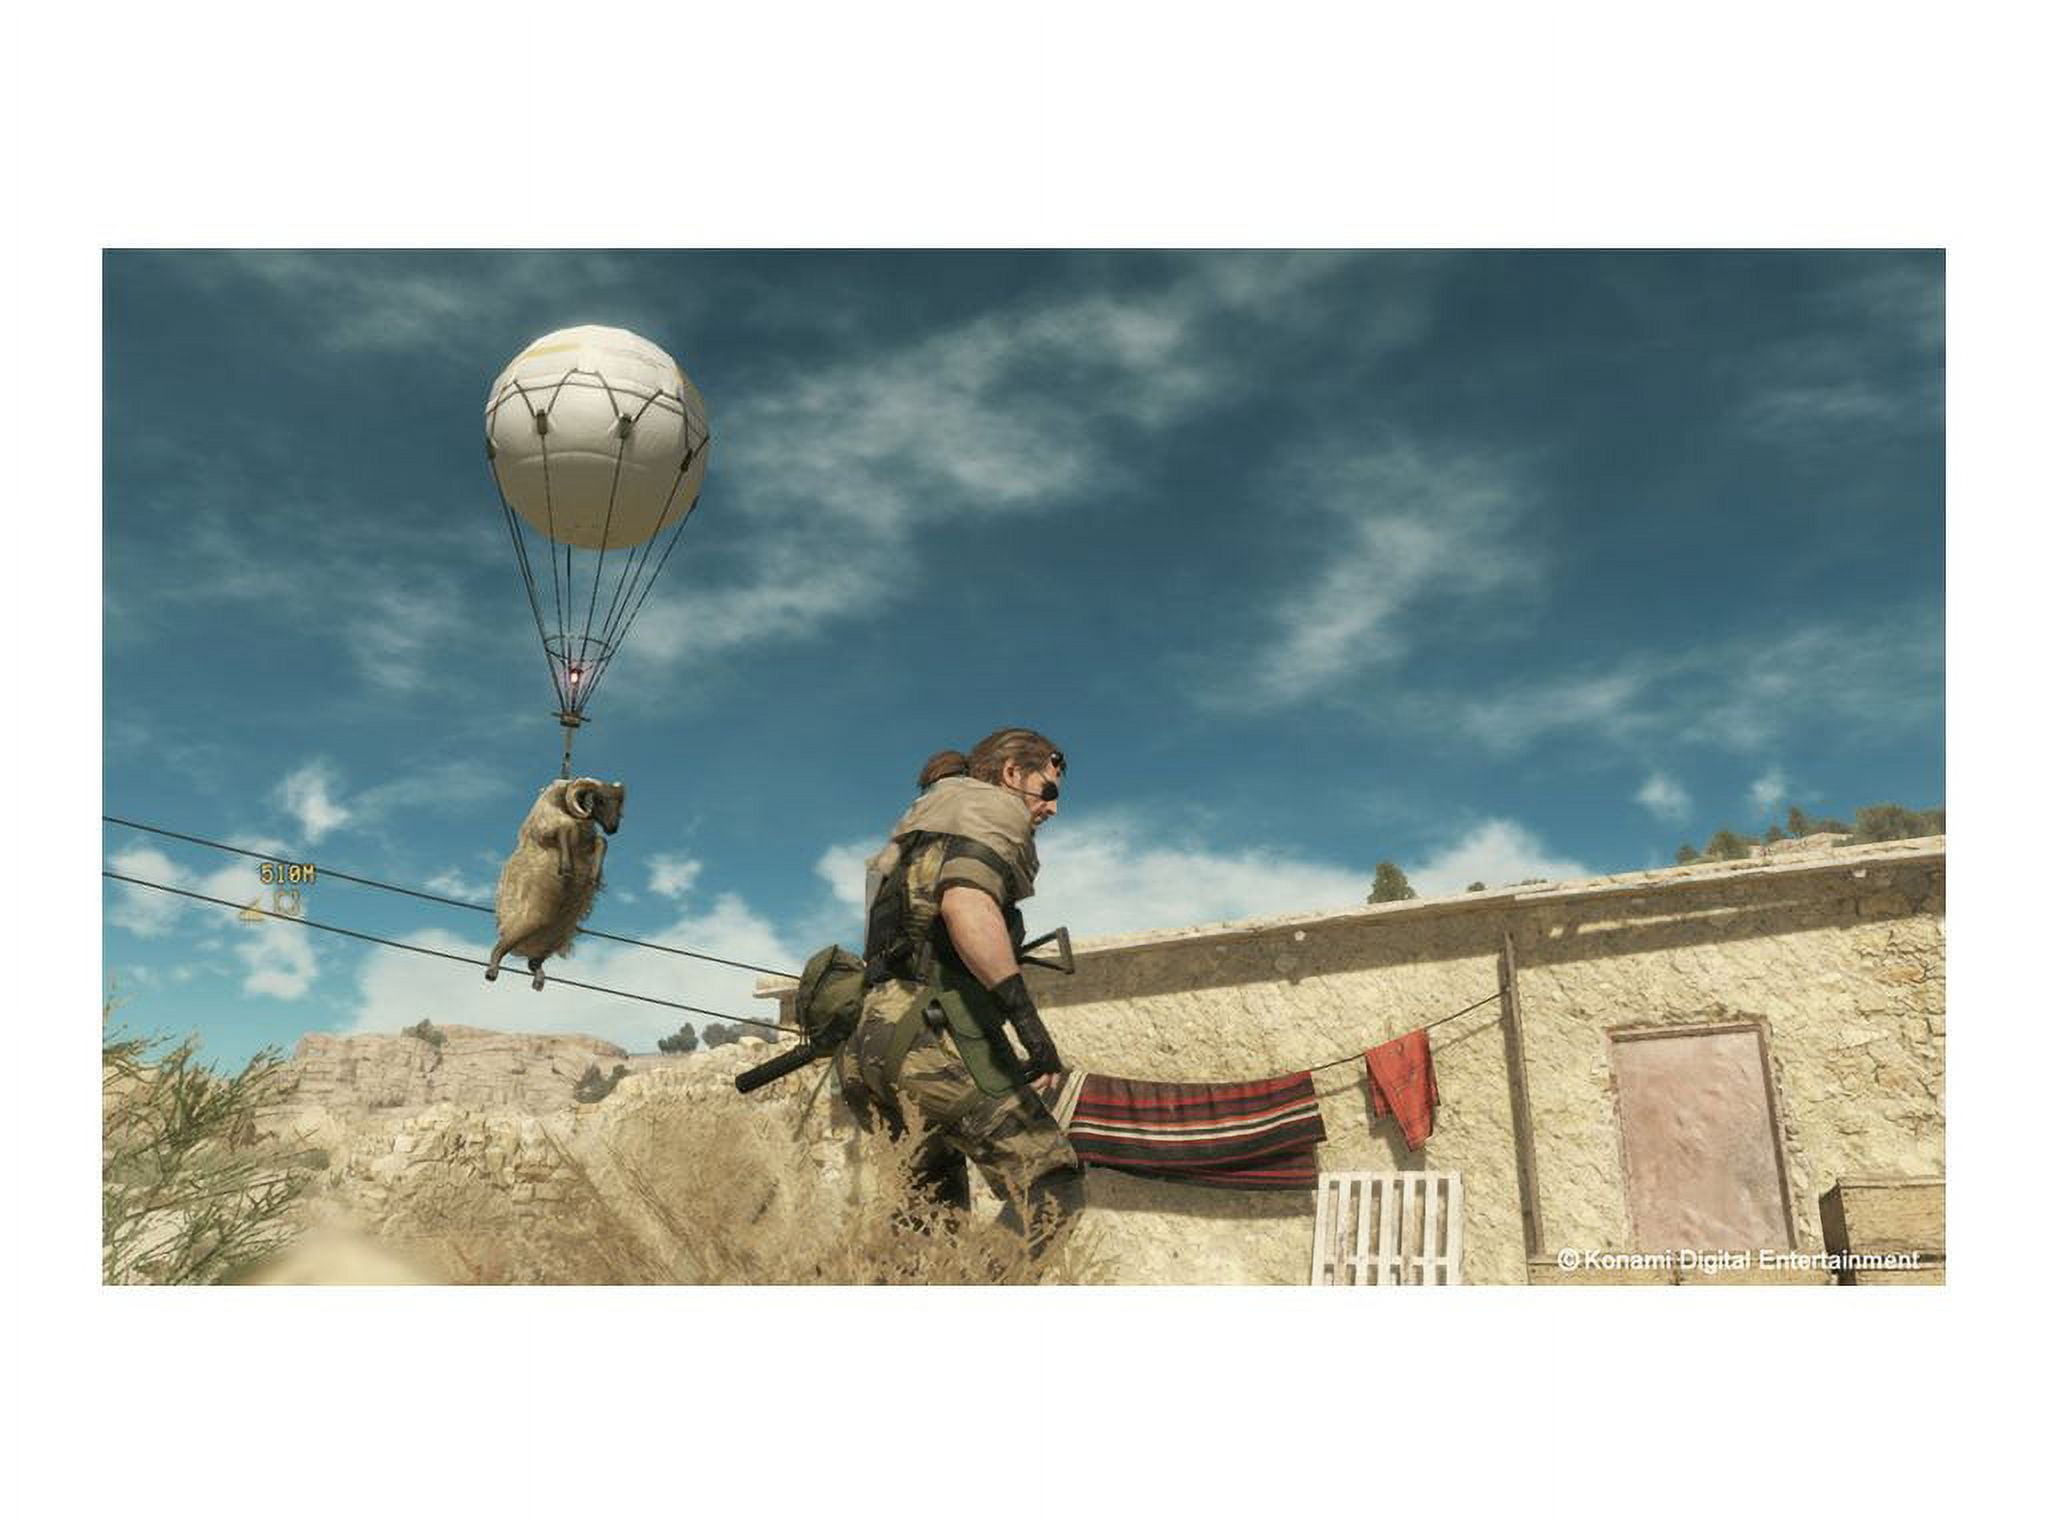 Jogo Metal Gear Solid HD Collection (Limited Edition) - Xbox 360 em  Promoção na Americanas